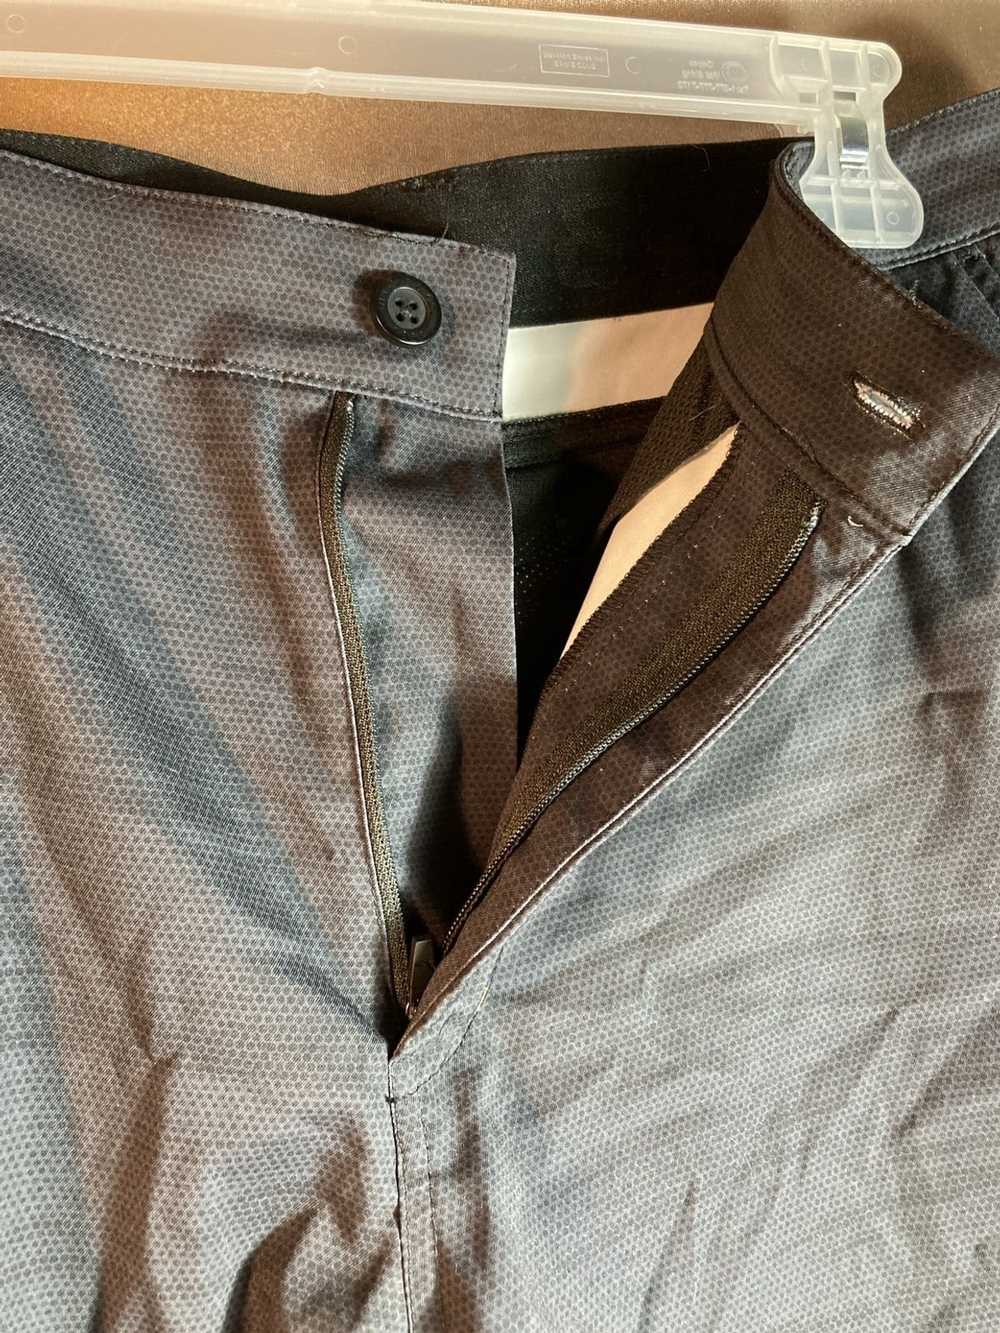 Hawke & Co. Dark gray flat front dress shorts. 32… - image 2